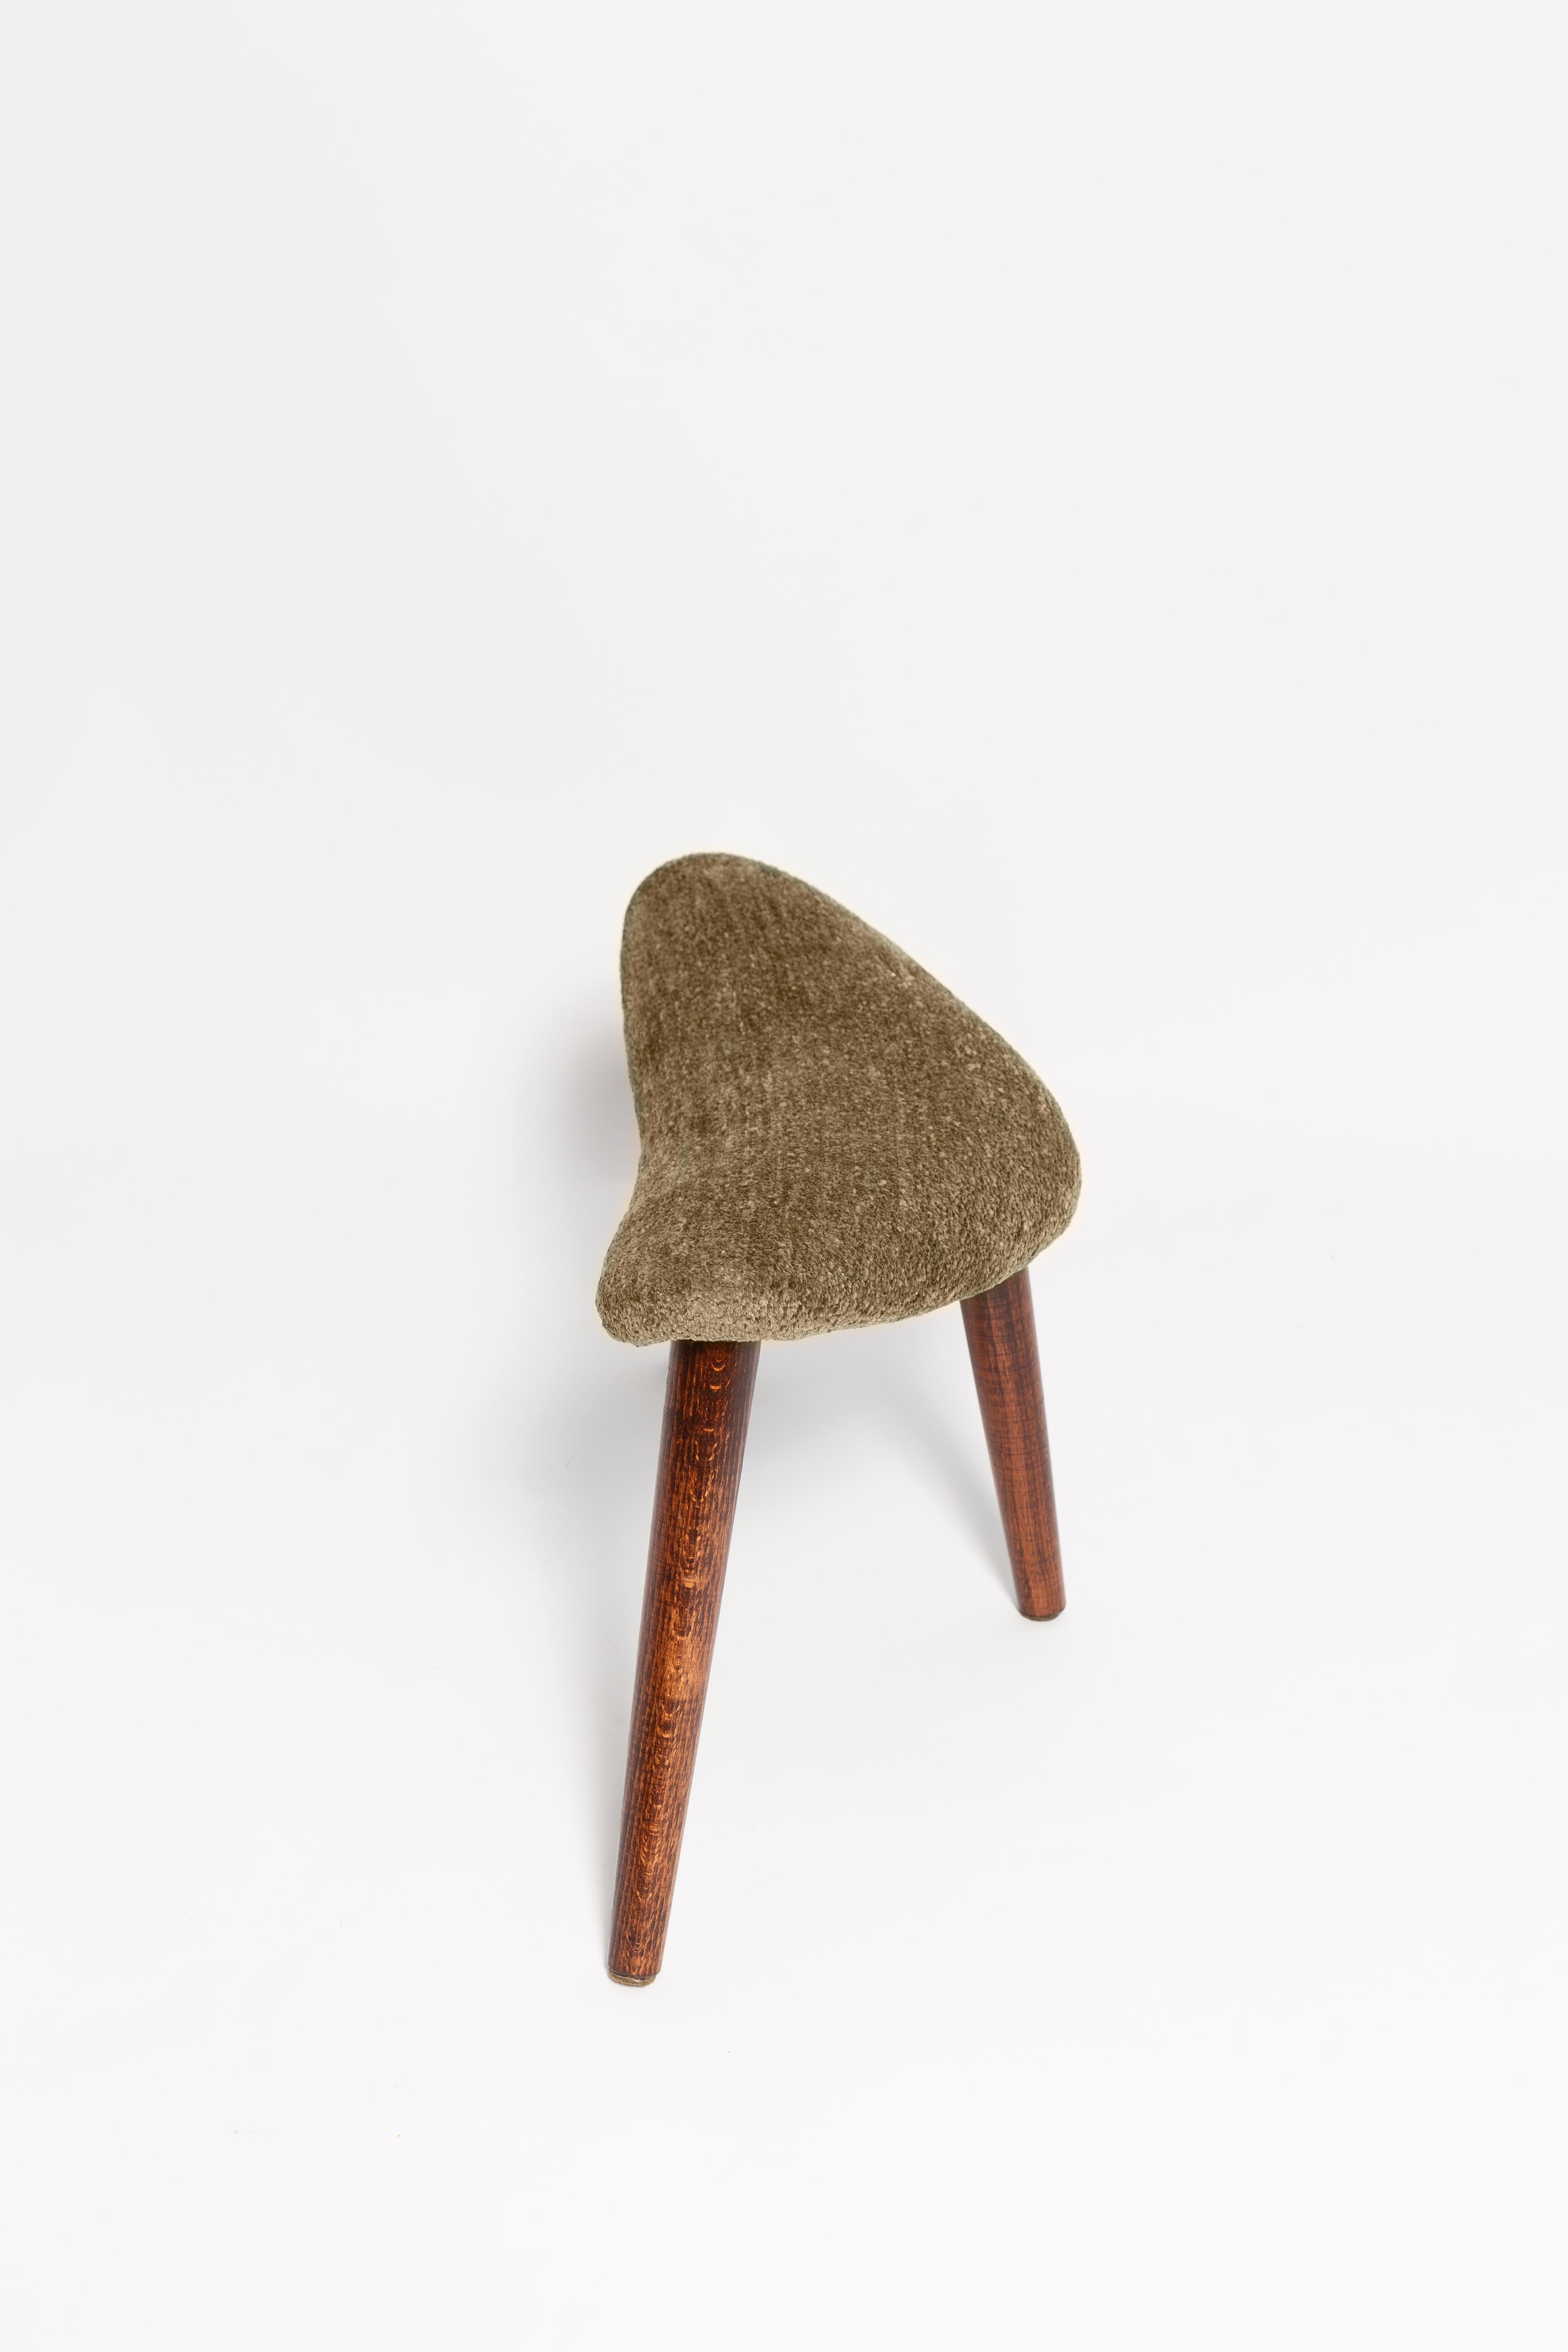 Mid Century Heart Chair and Stool, Green Olive Velvet, Dark Wood, Europe 1960s For Sale 7